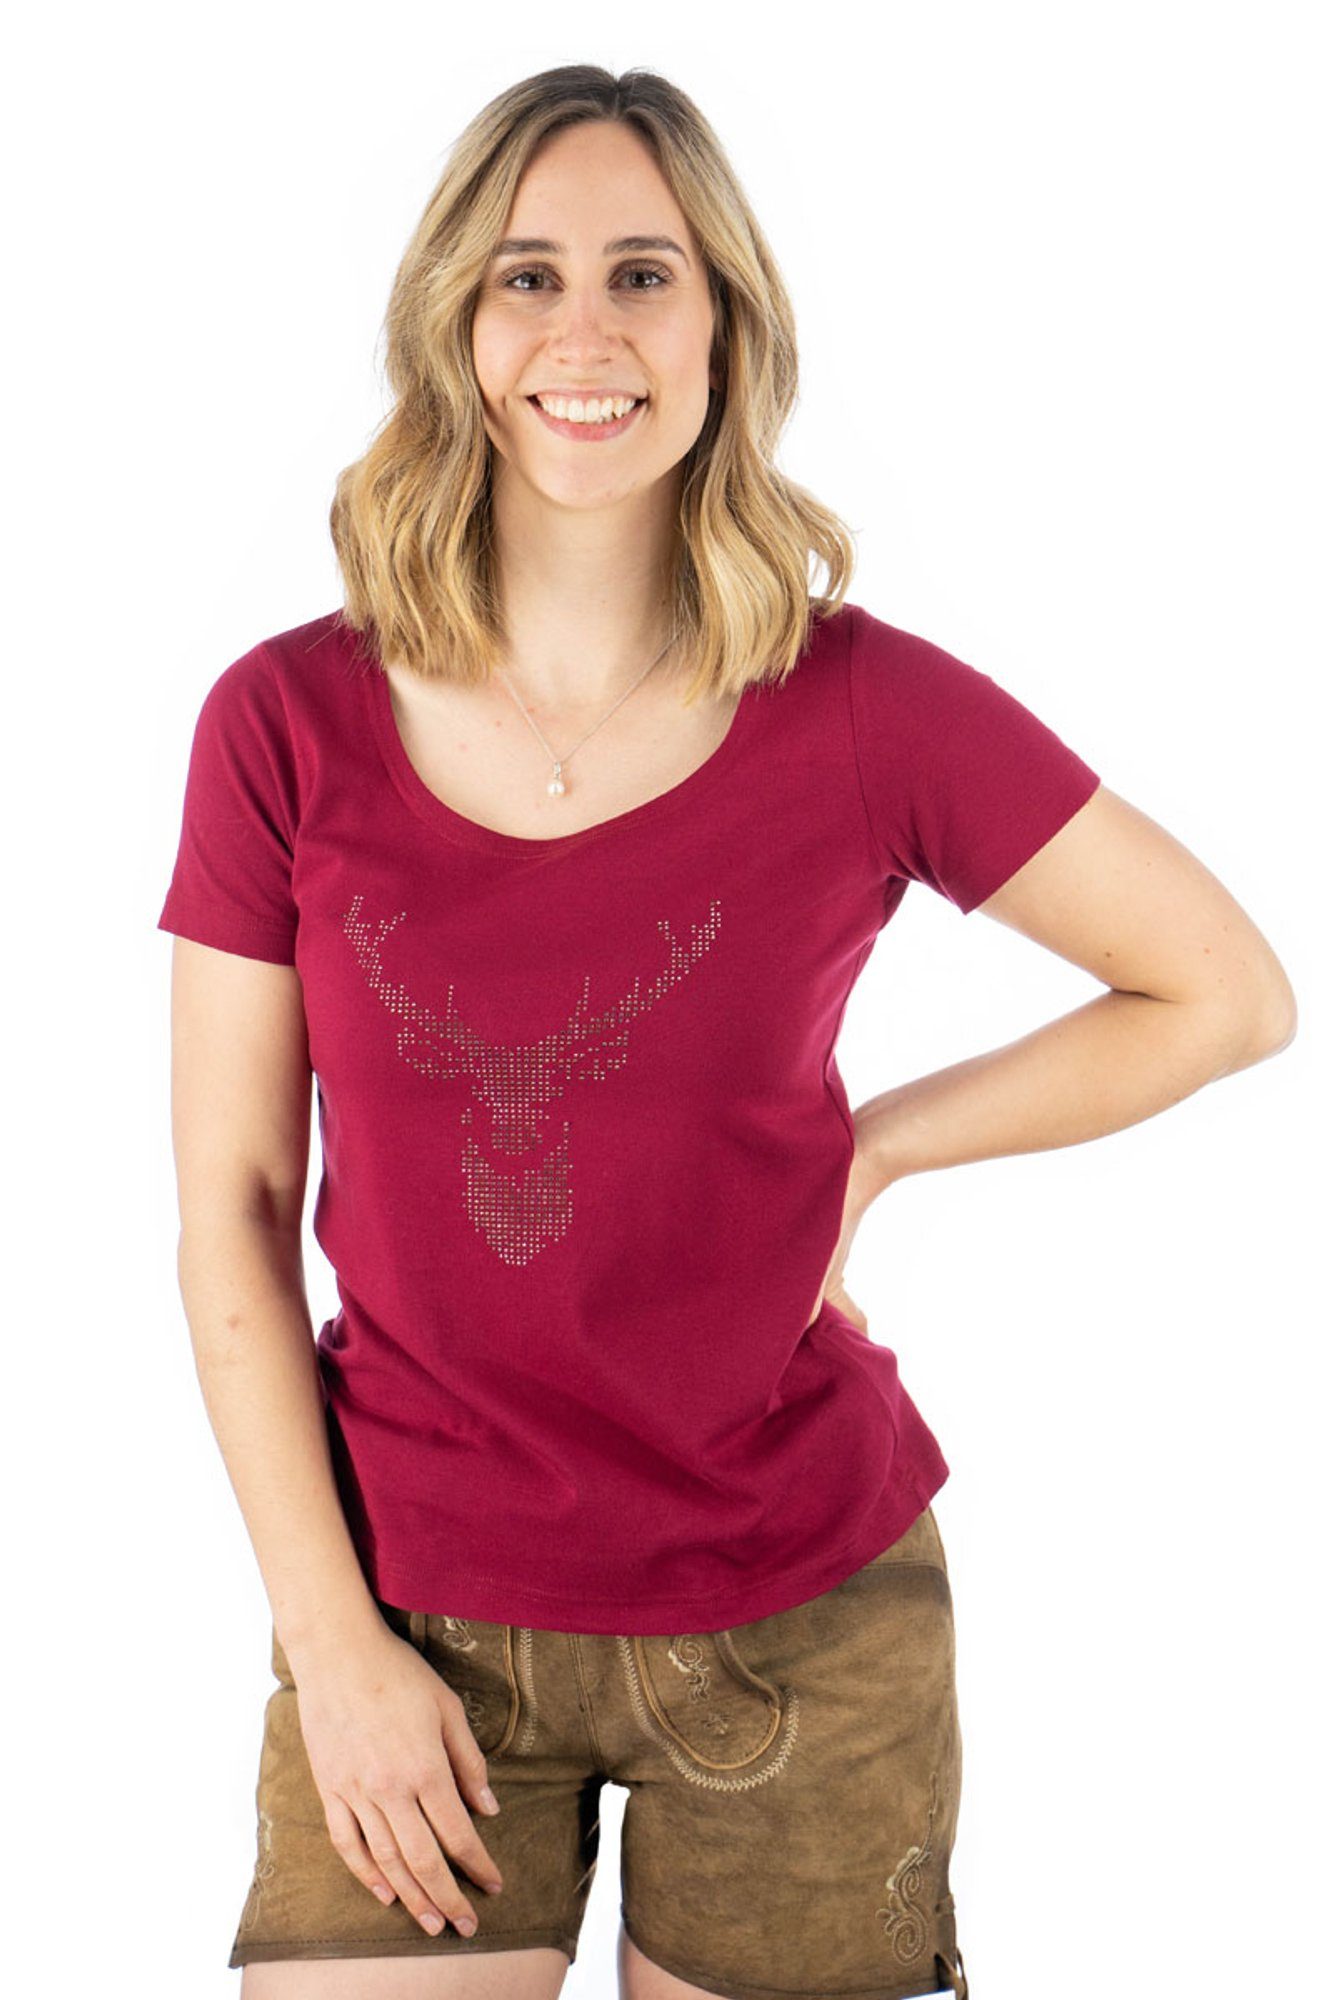 OS-Trachten Trachtenshirt Damen Trachten T-Shirt weinrot mit Hirschmotiv,  elastische Baumwollmischung